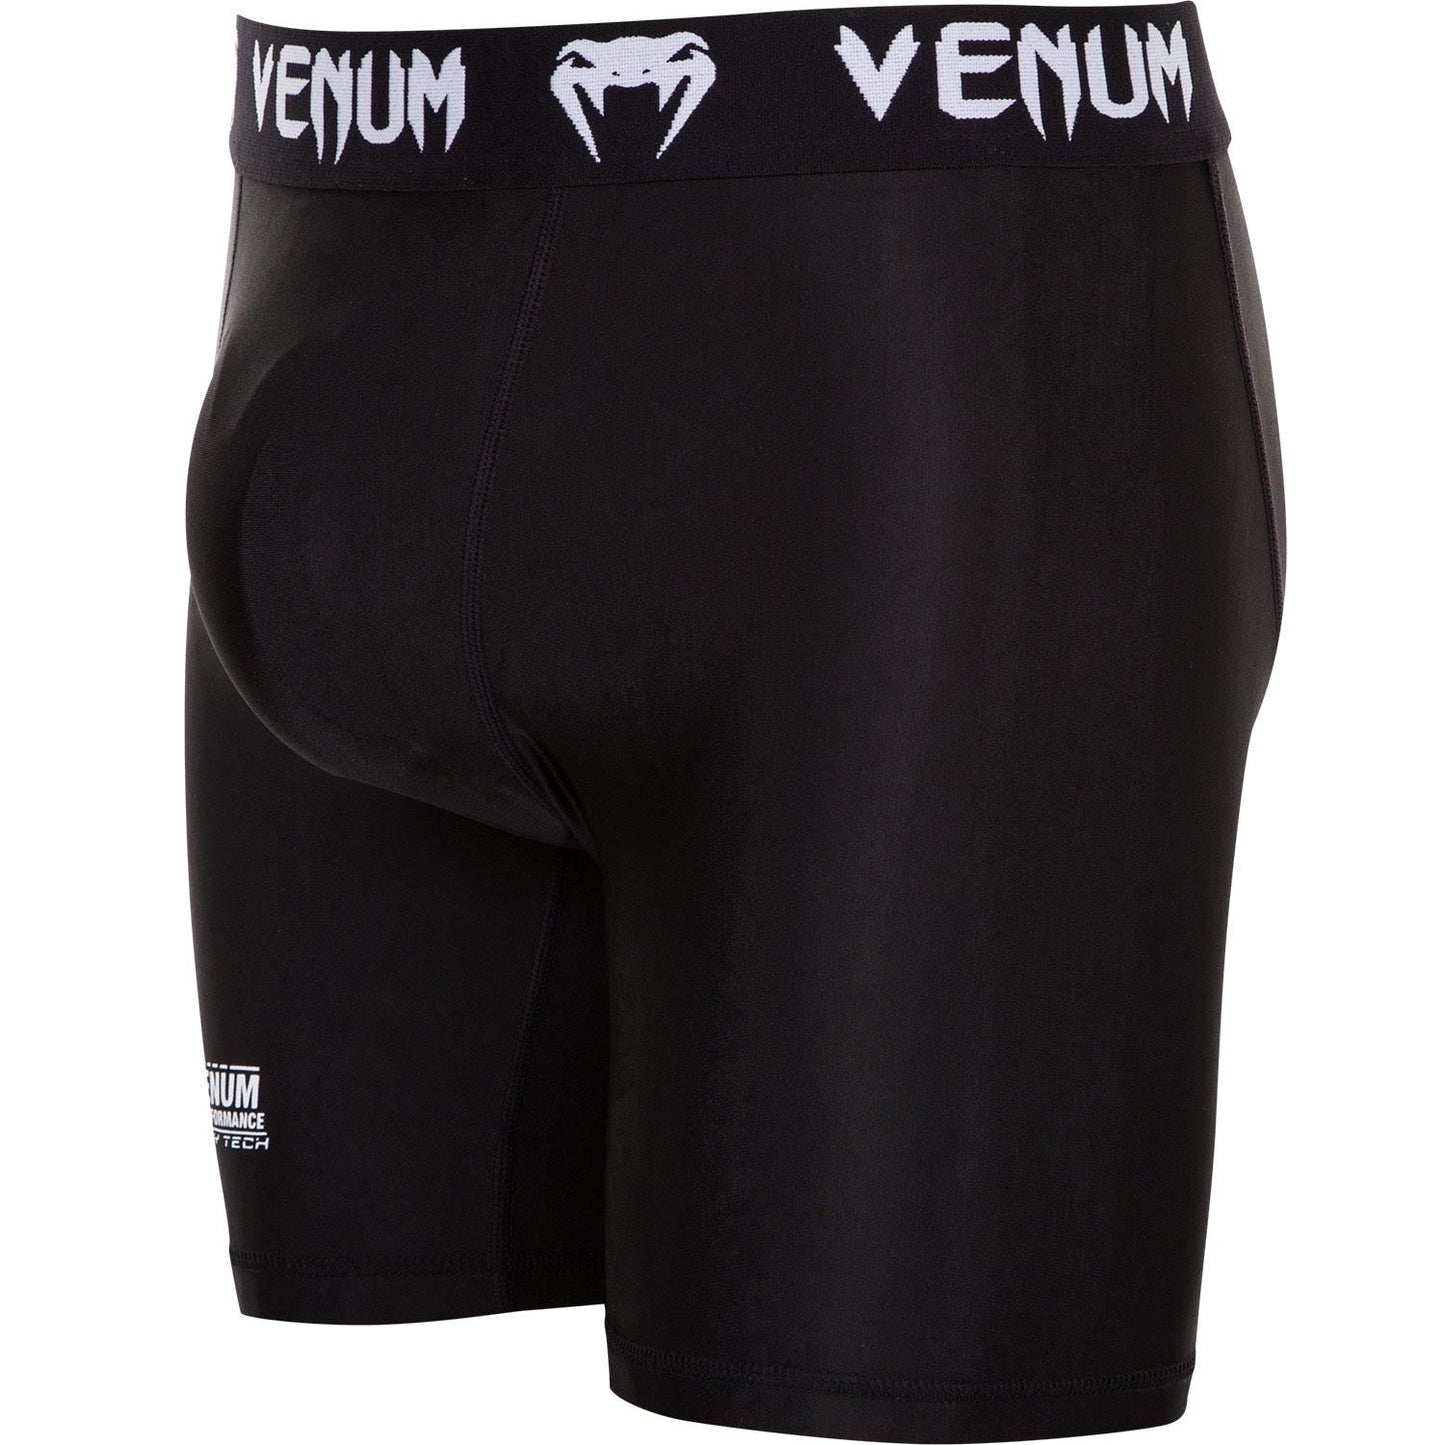 Venum Contender 2.0 Compression Shorts - Black/White